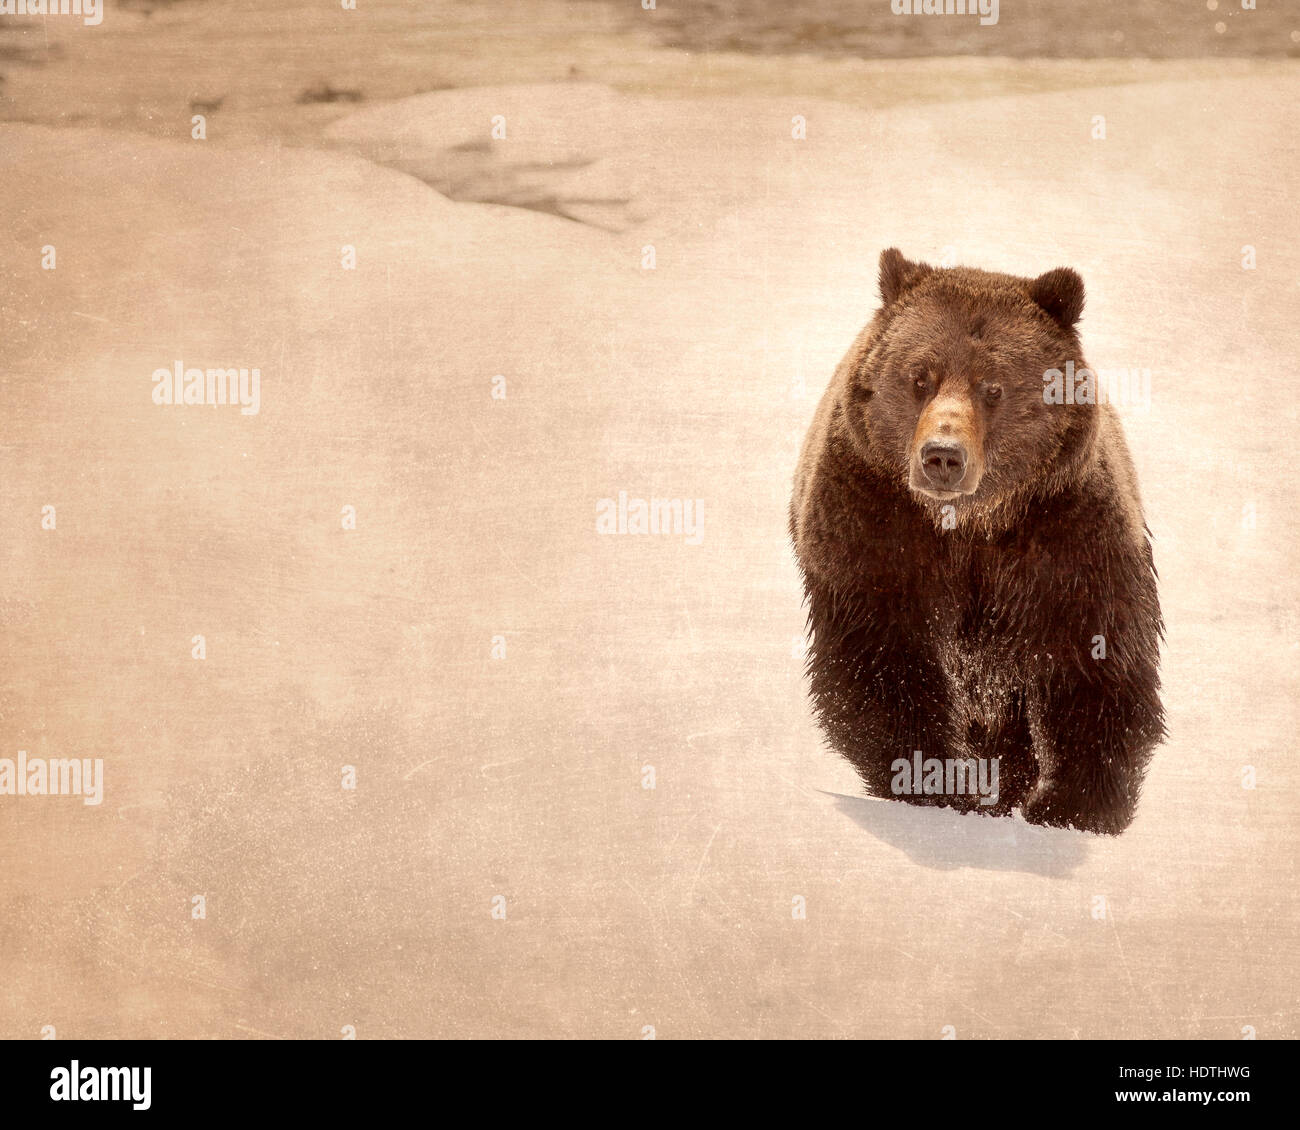 Bear Alpha Bites cereal boxes Stock Photo - Alamy